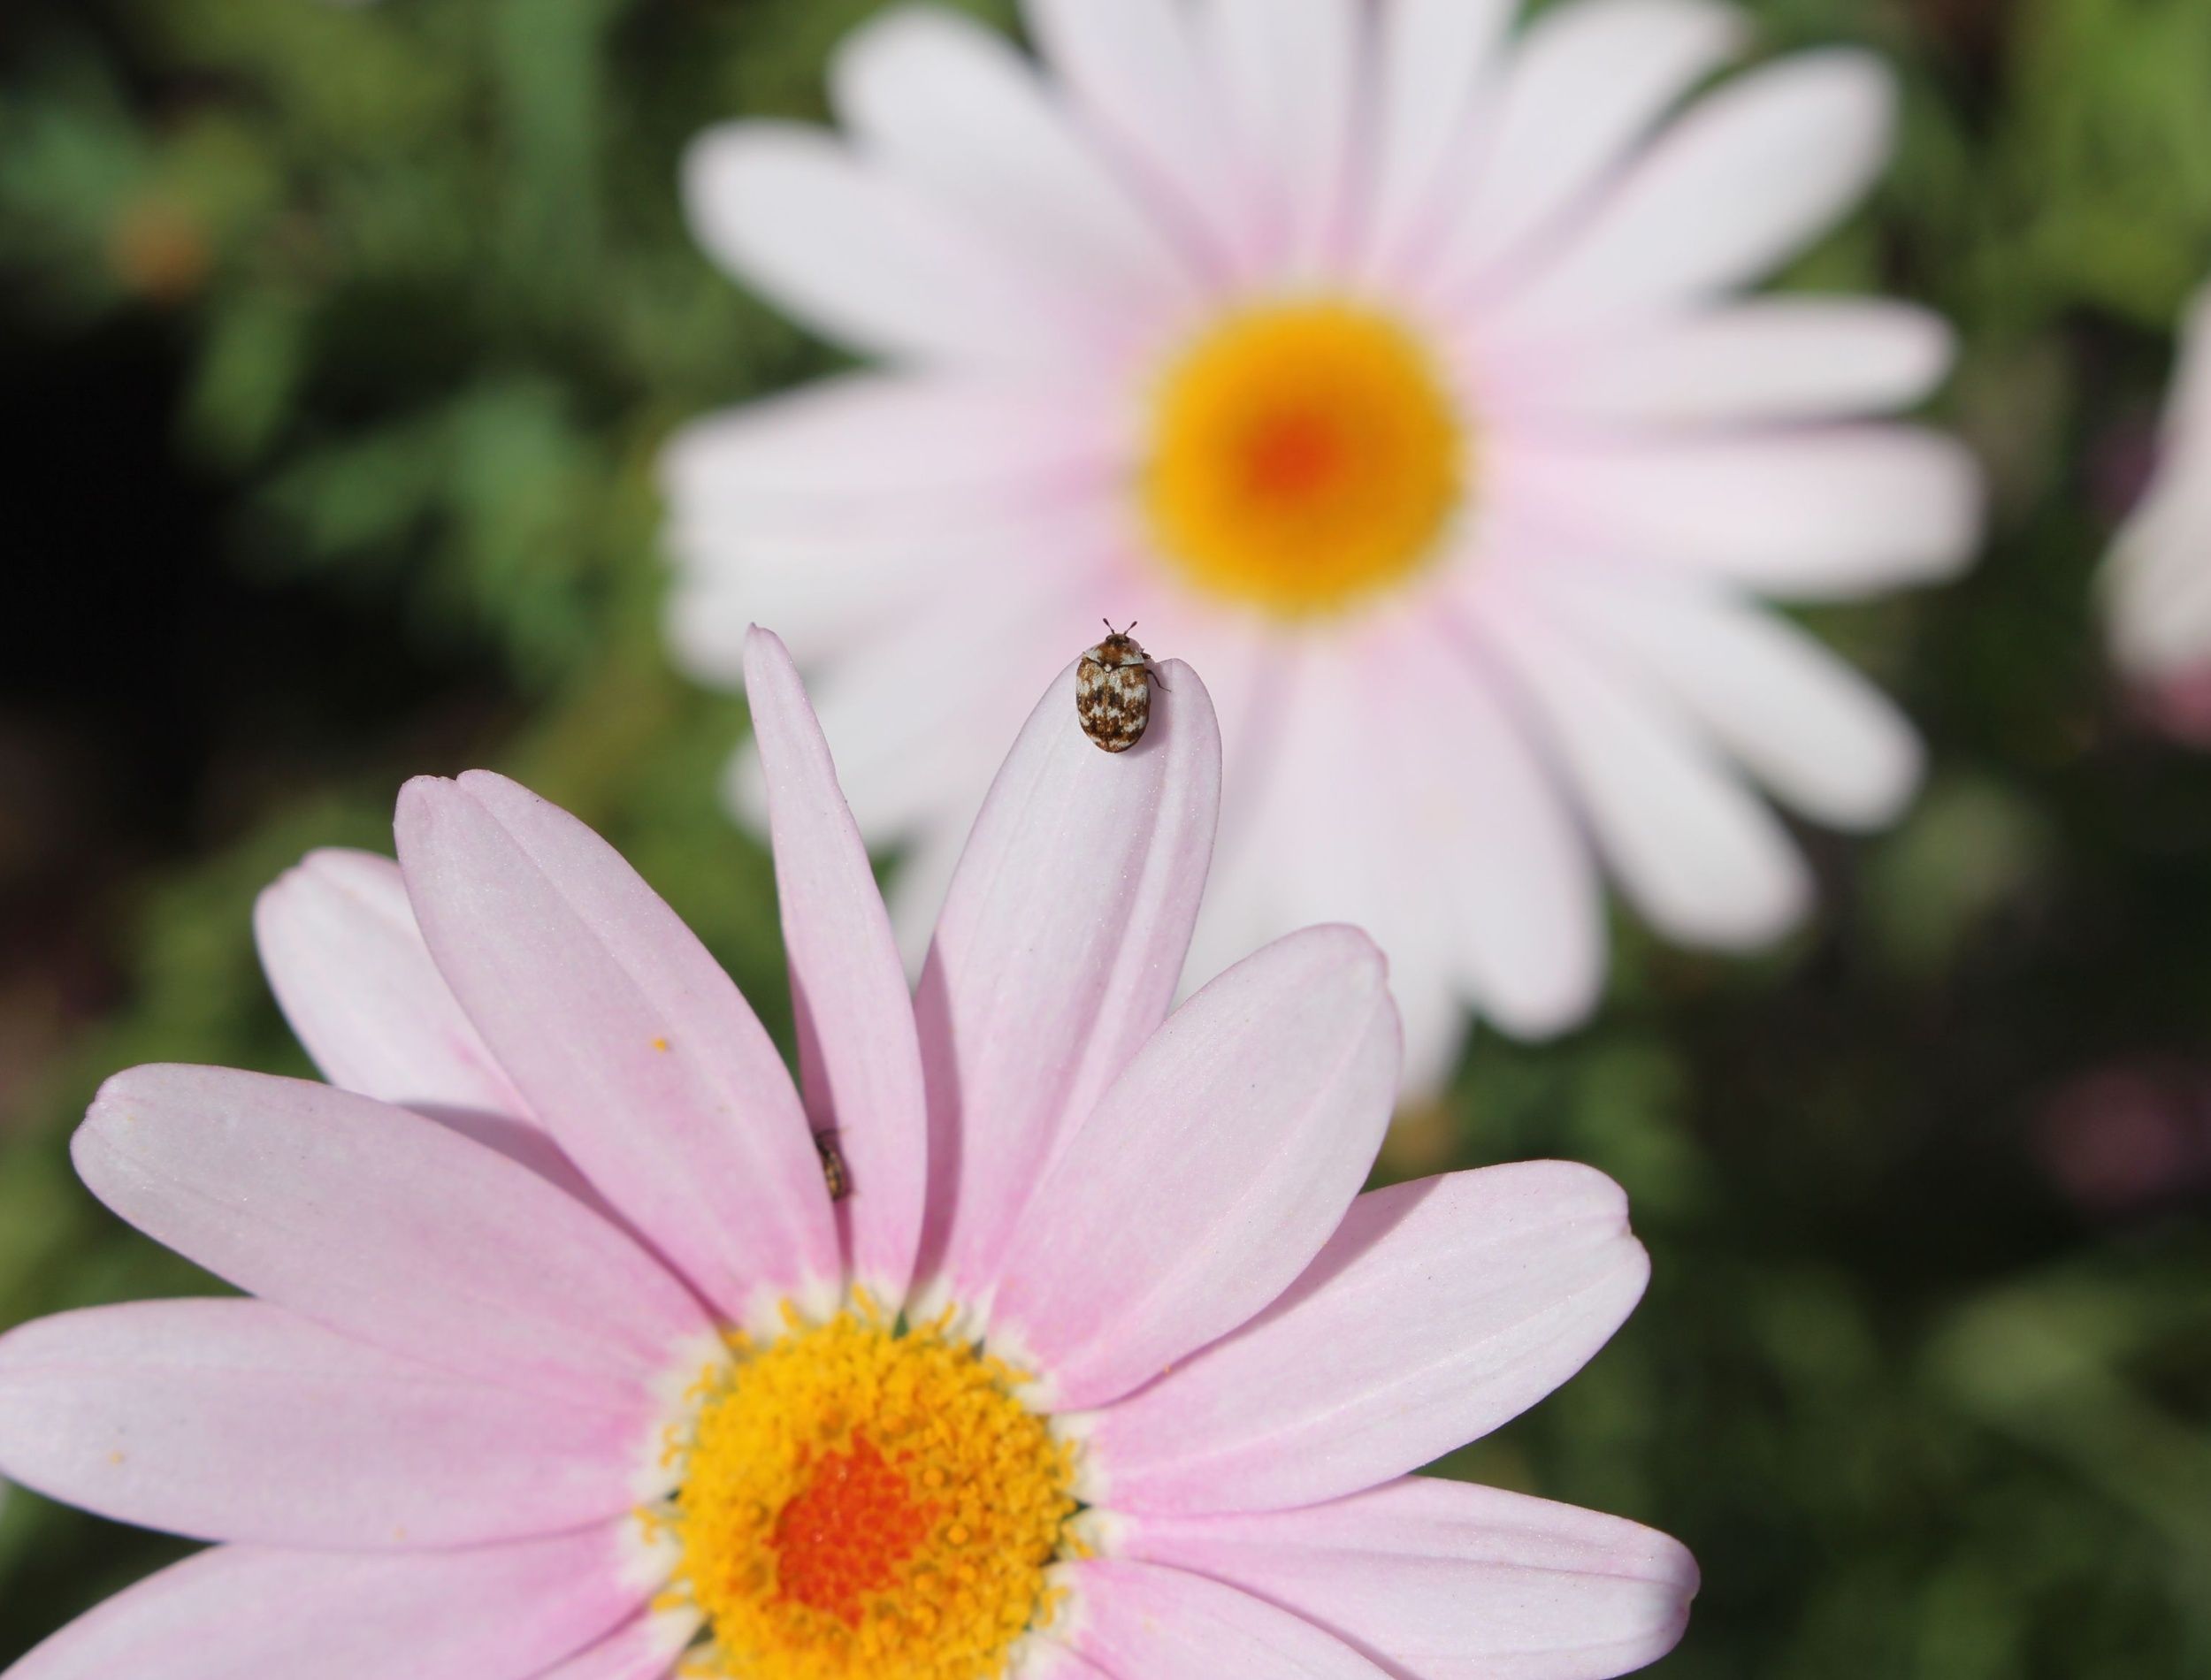 carpet beetle sitting on flower